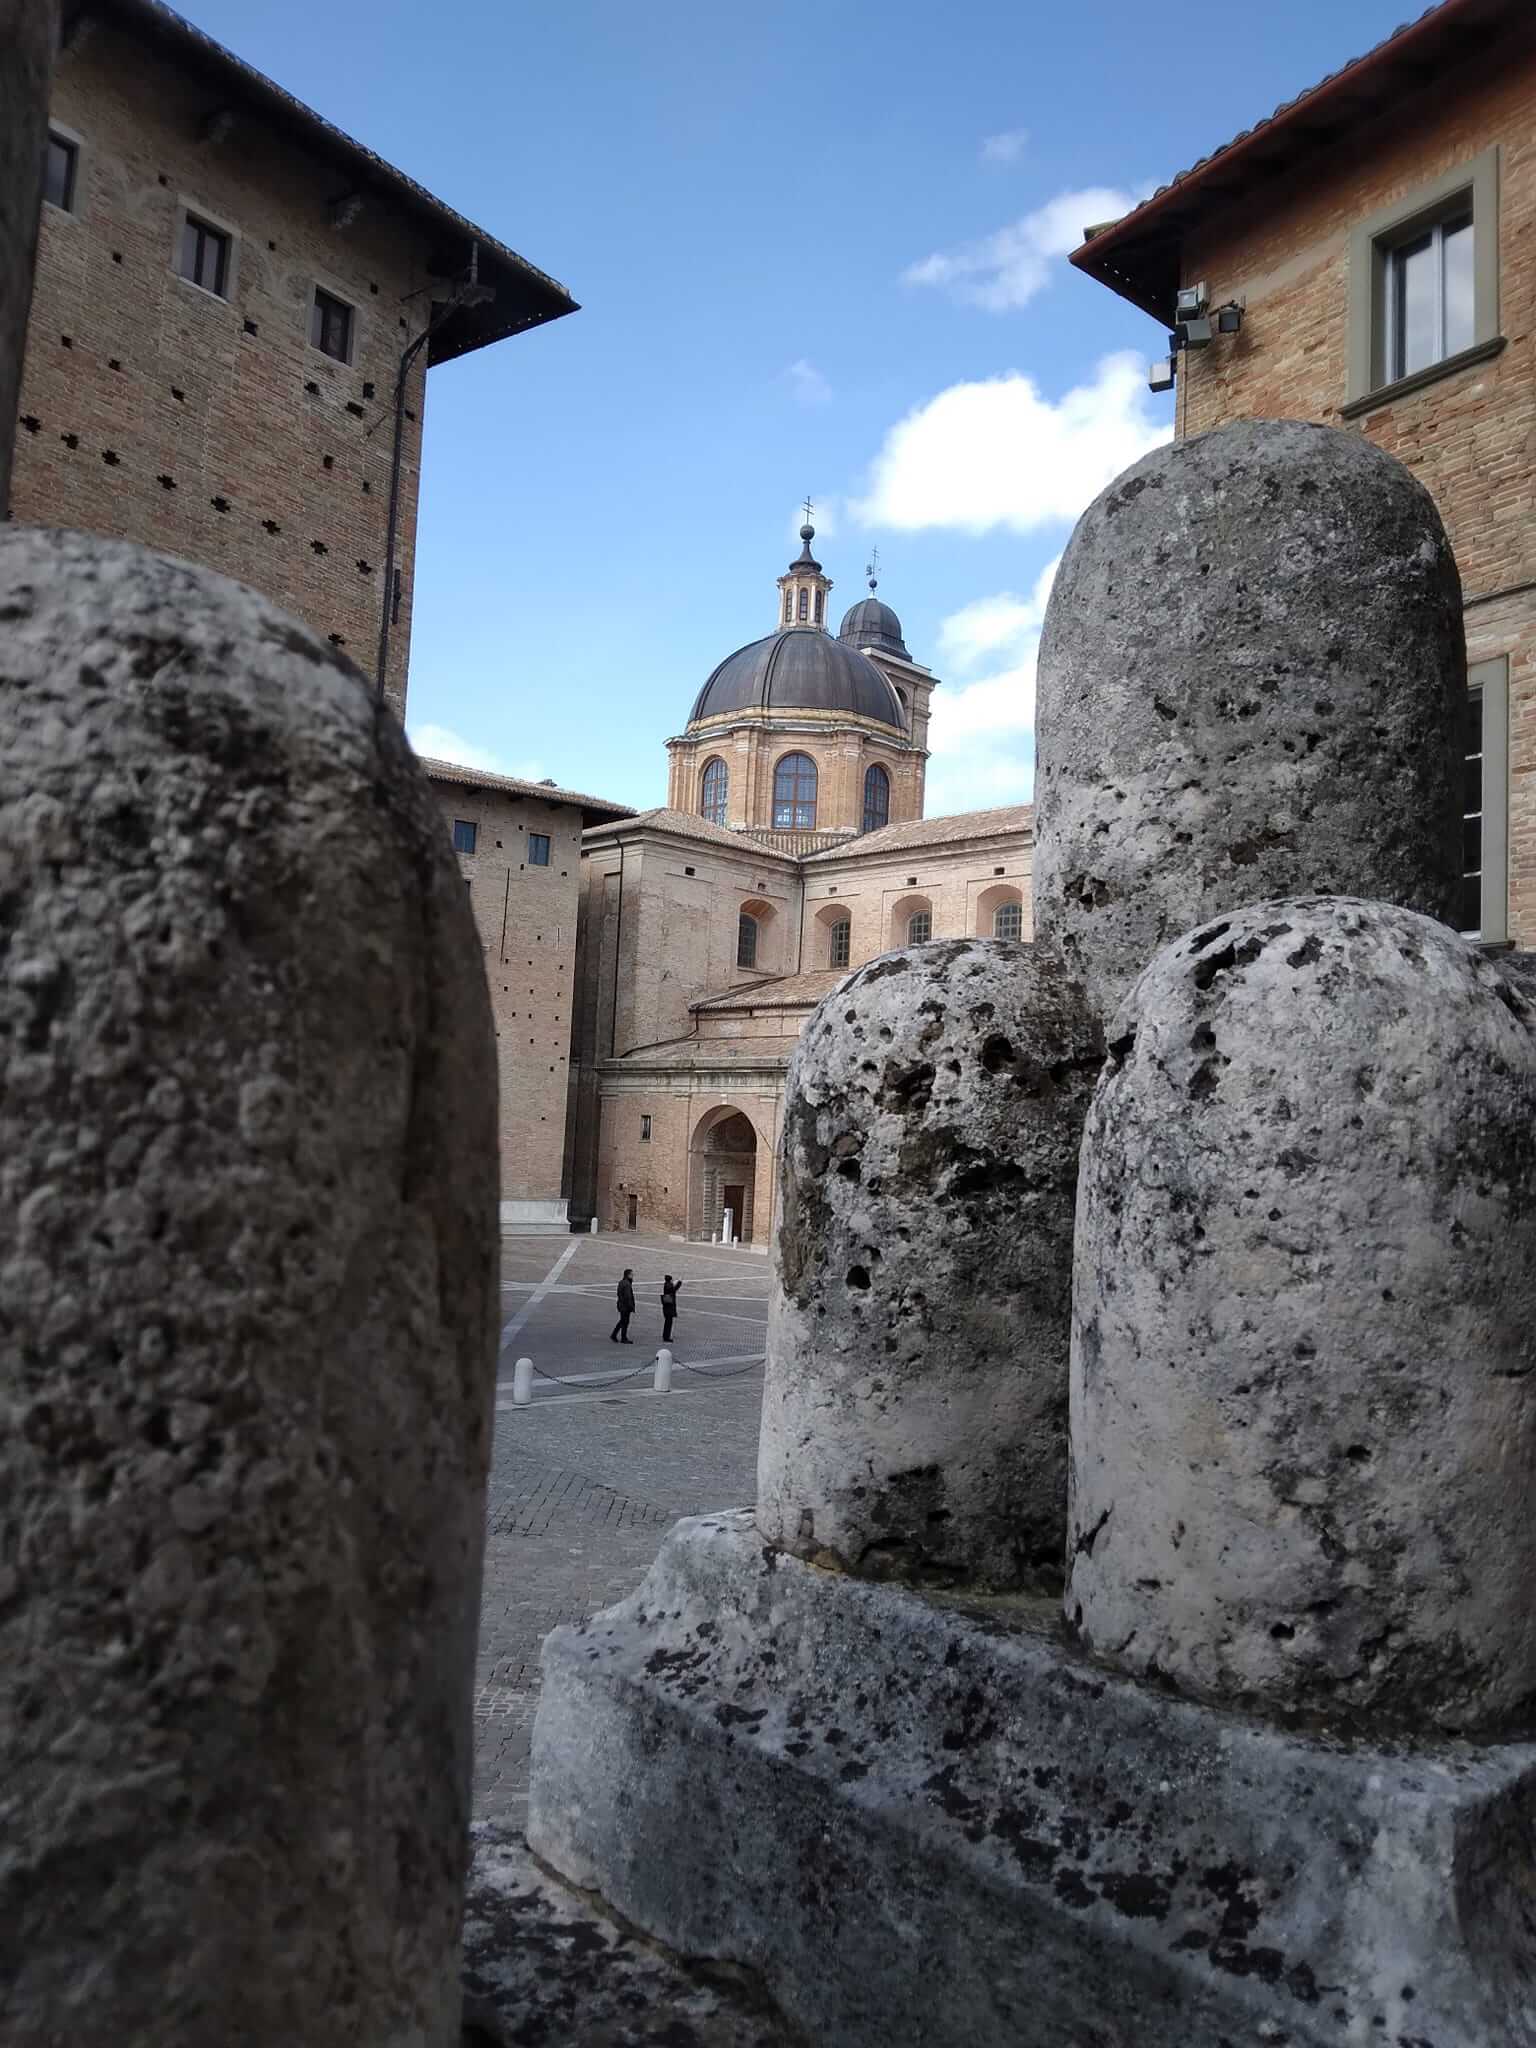 Cose da vedere a Urbino, il Duomo o Cattedrale di Santa Maria Assunta